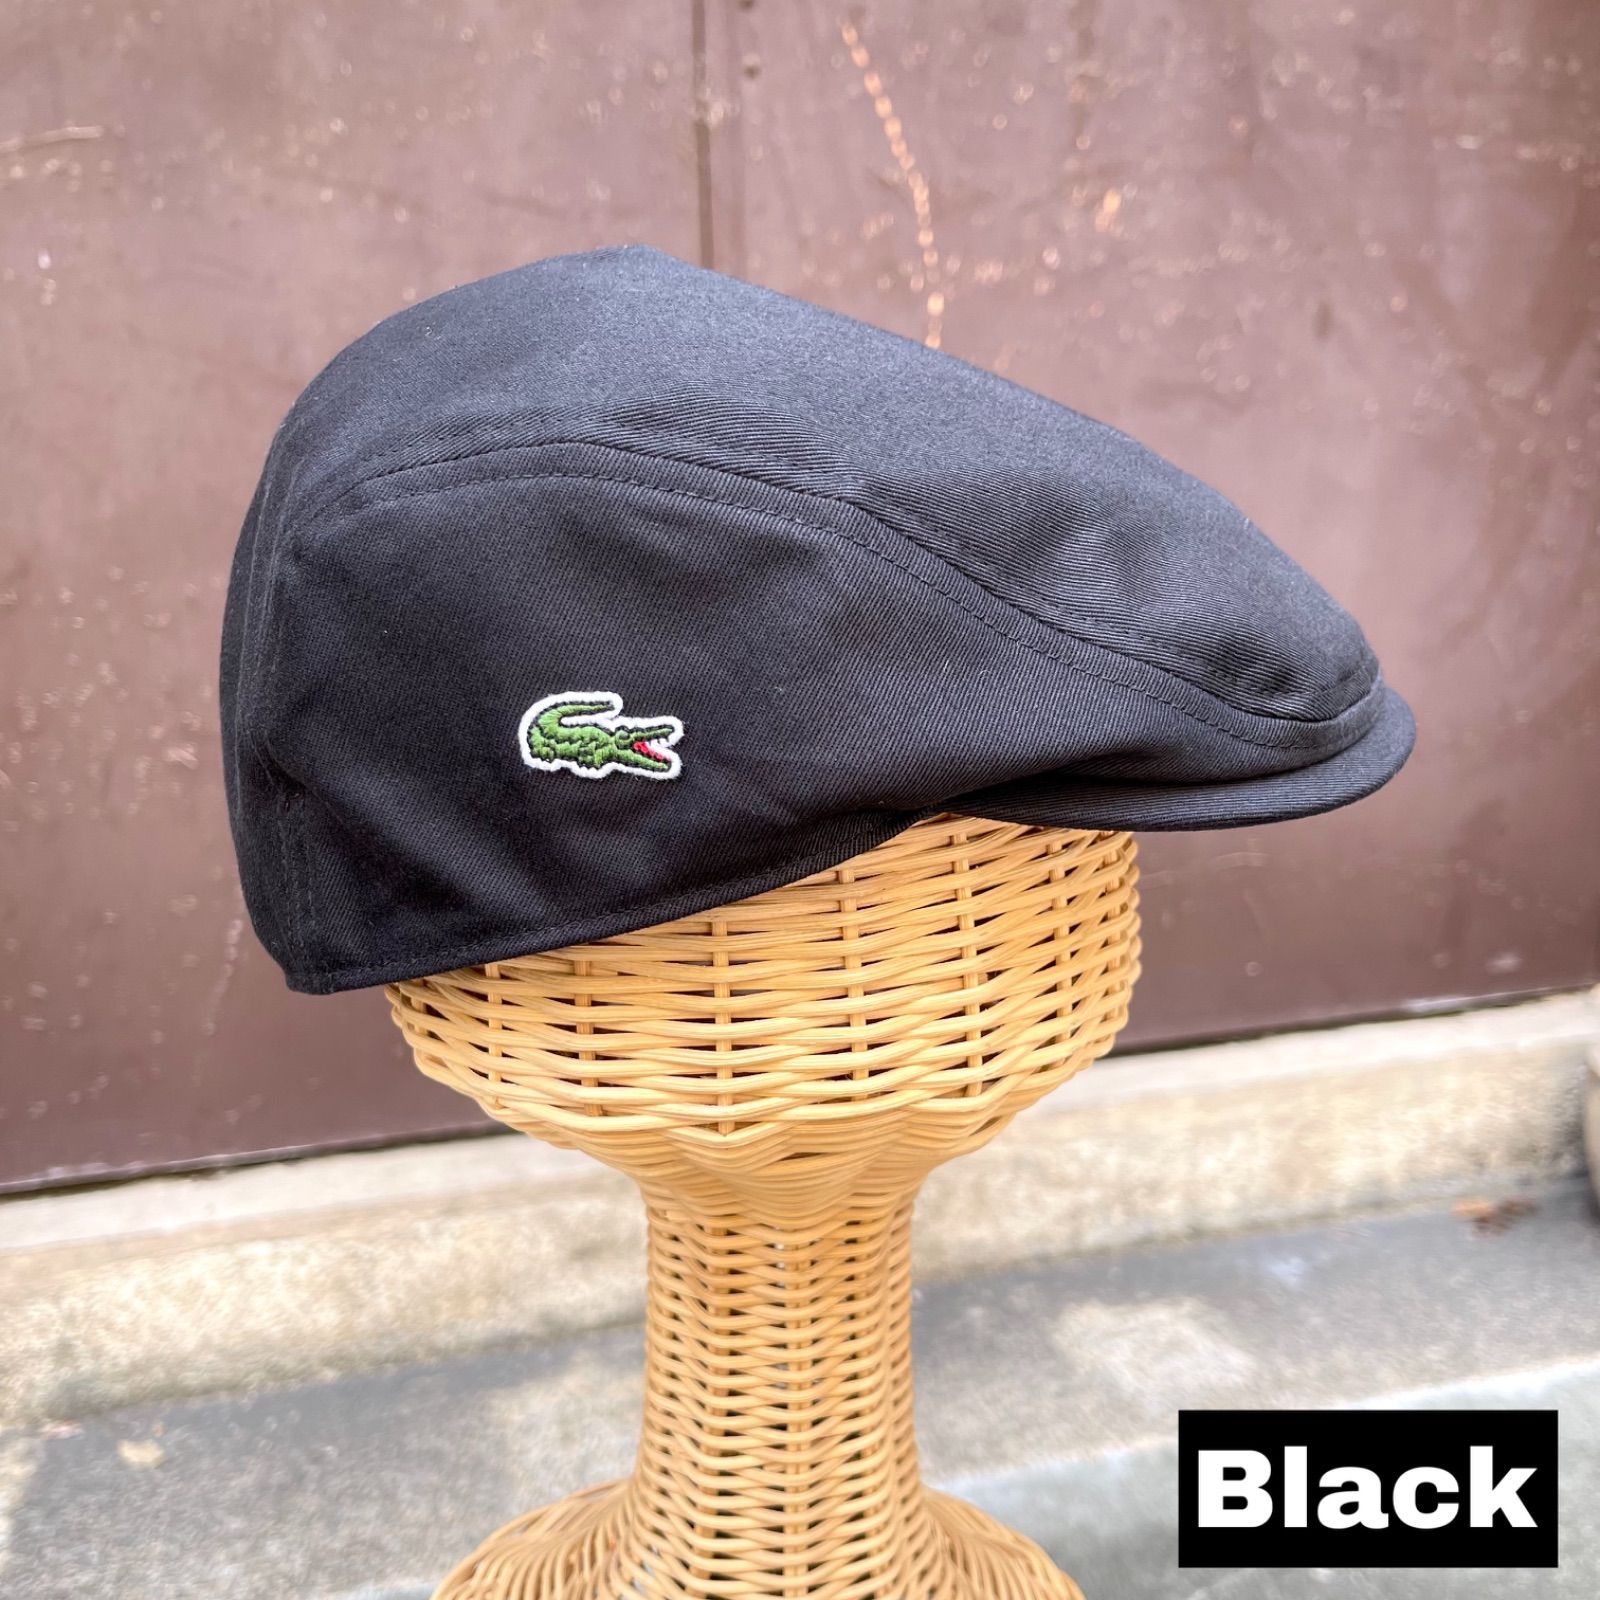 LACOSTE ラコステ ハンチング コットン素材 日本製 Black 洗える帽子